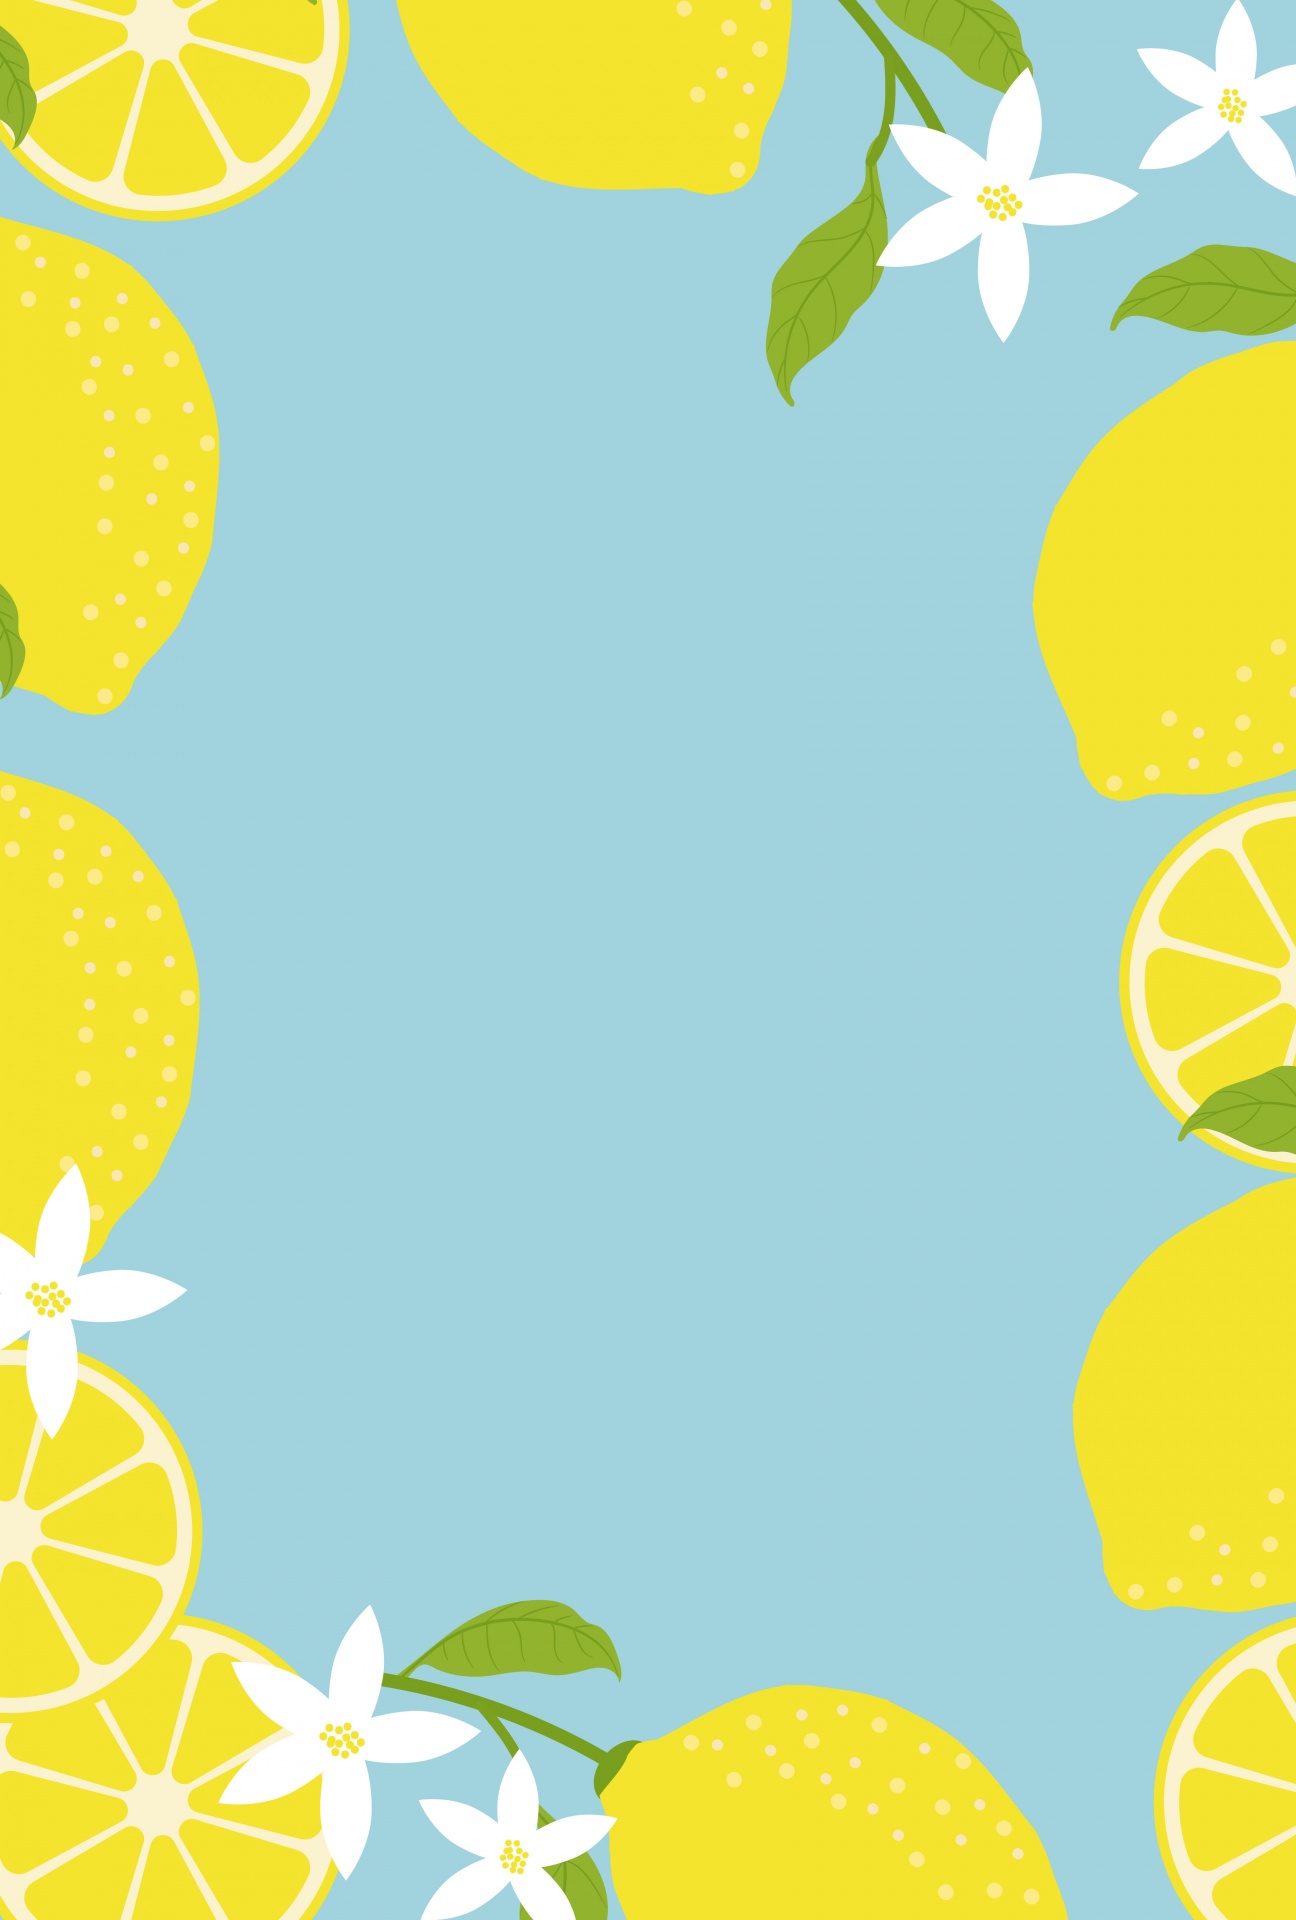 Lemon Fruit Frame Poster Free Stock Photo - Public Domain Pictures